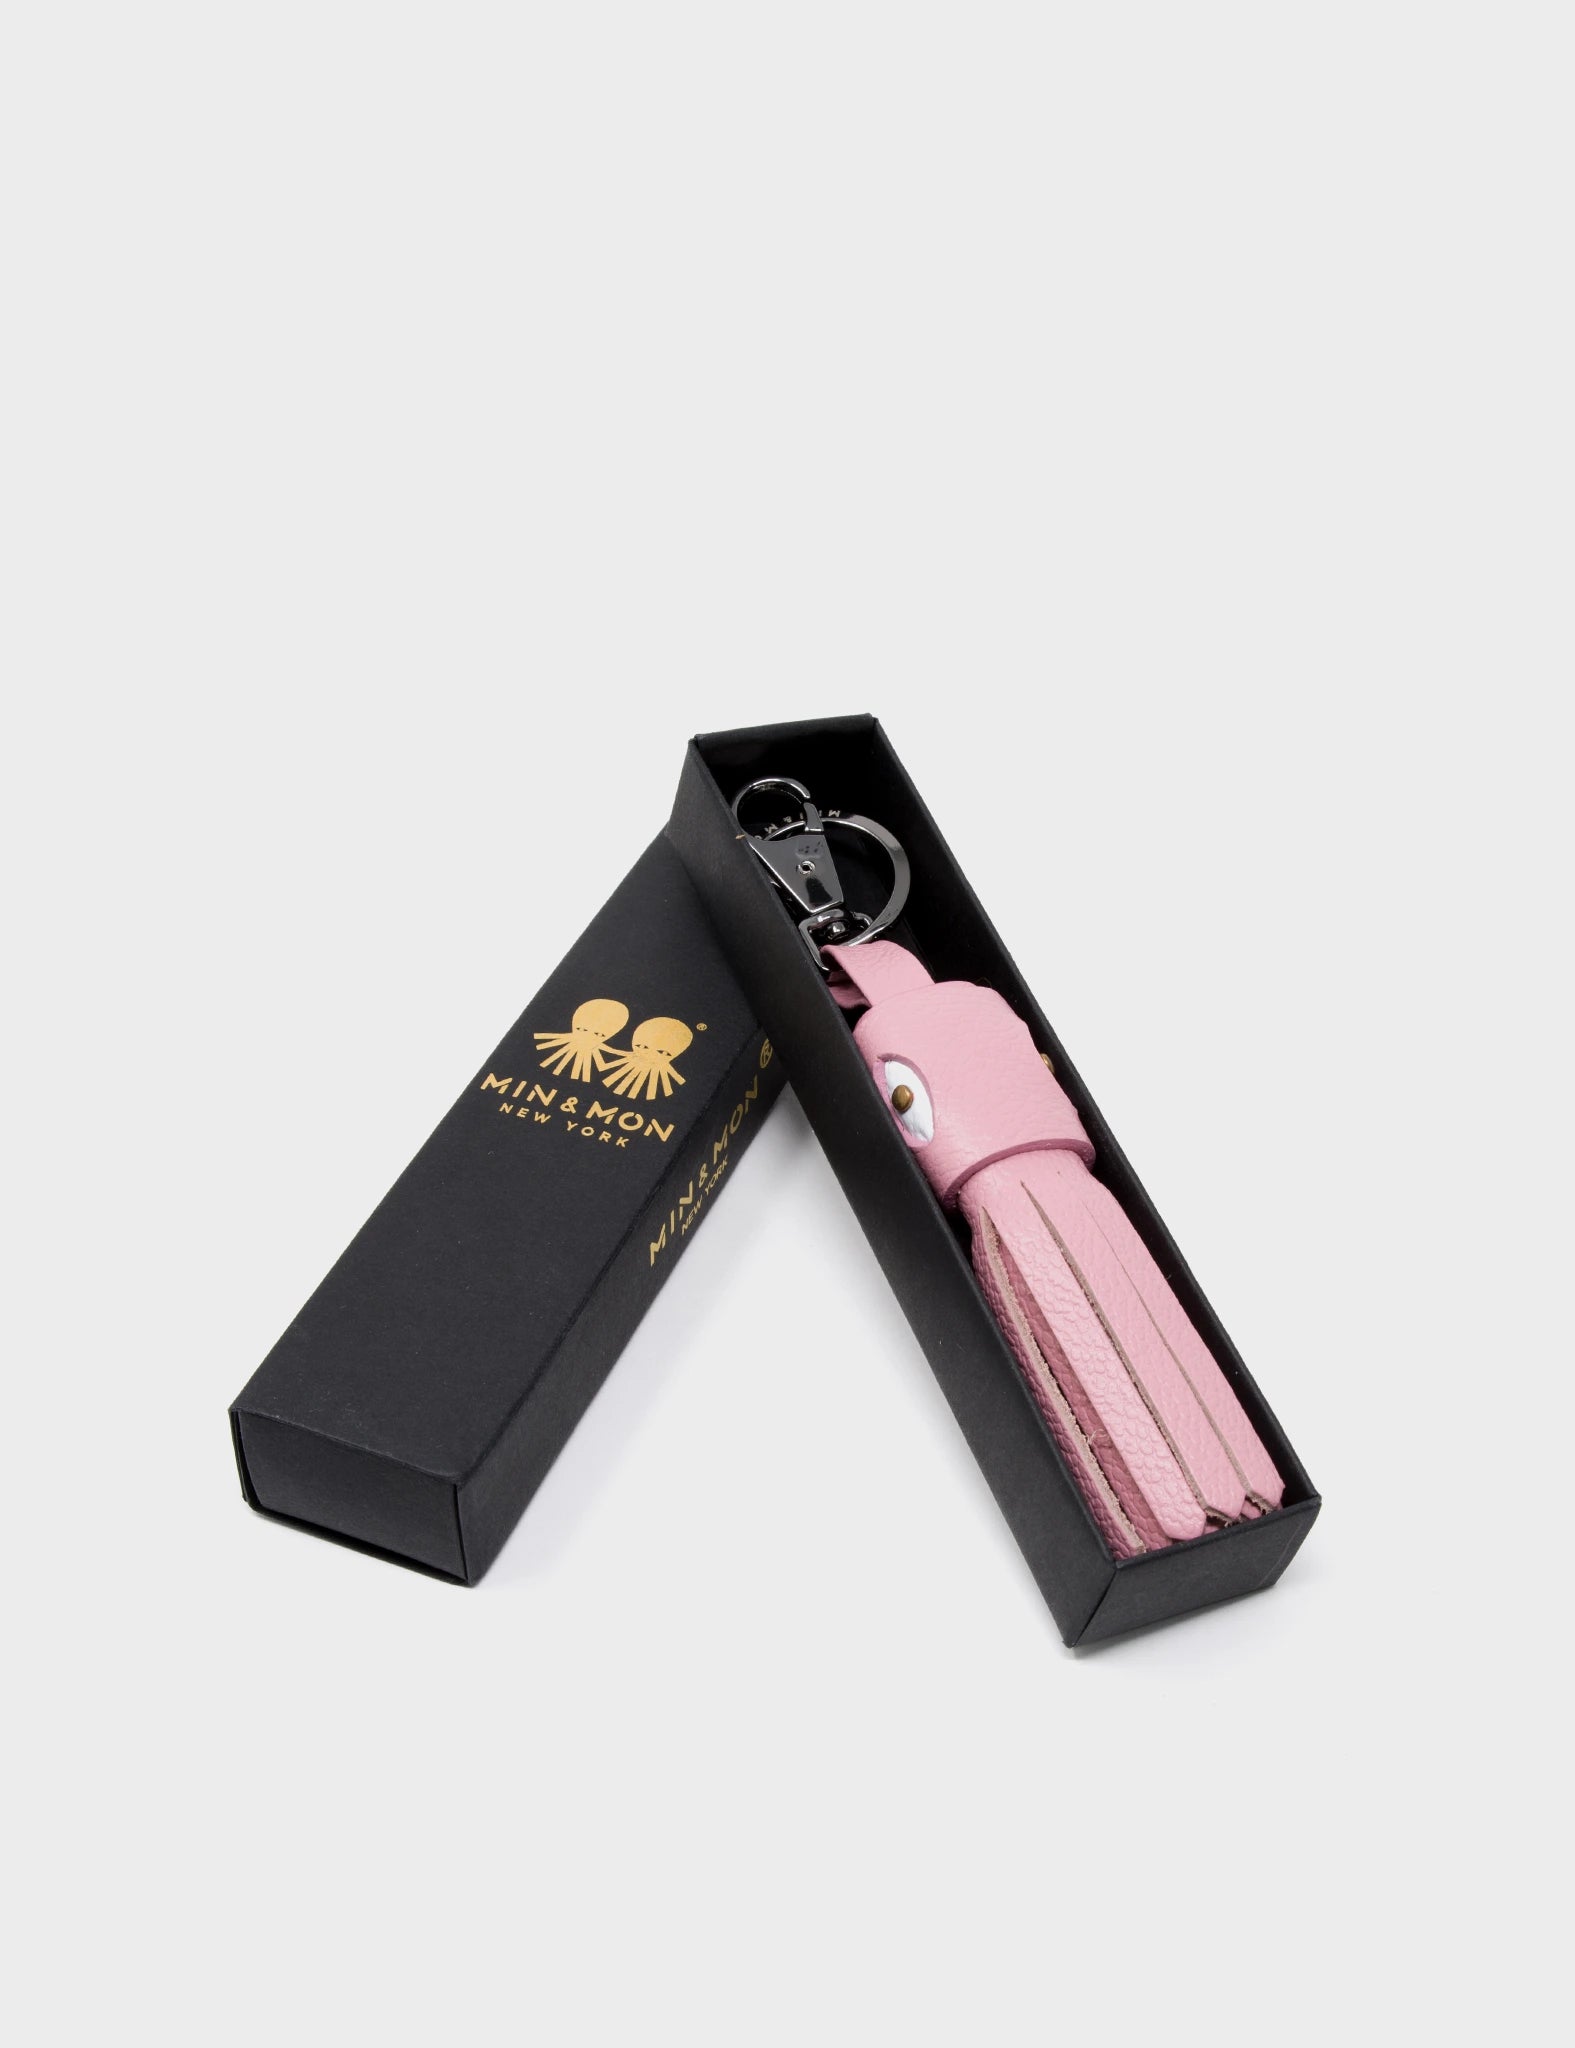 Calamari Charm - Blush Pink Leather Keychain - Package